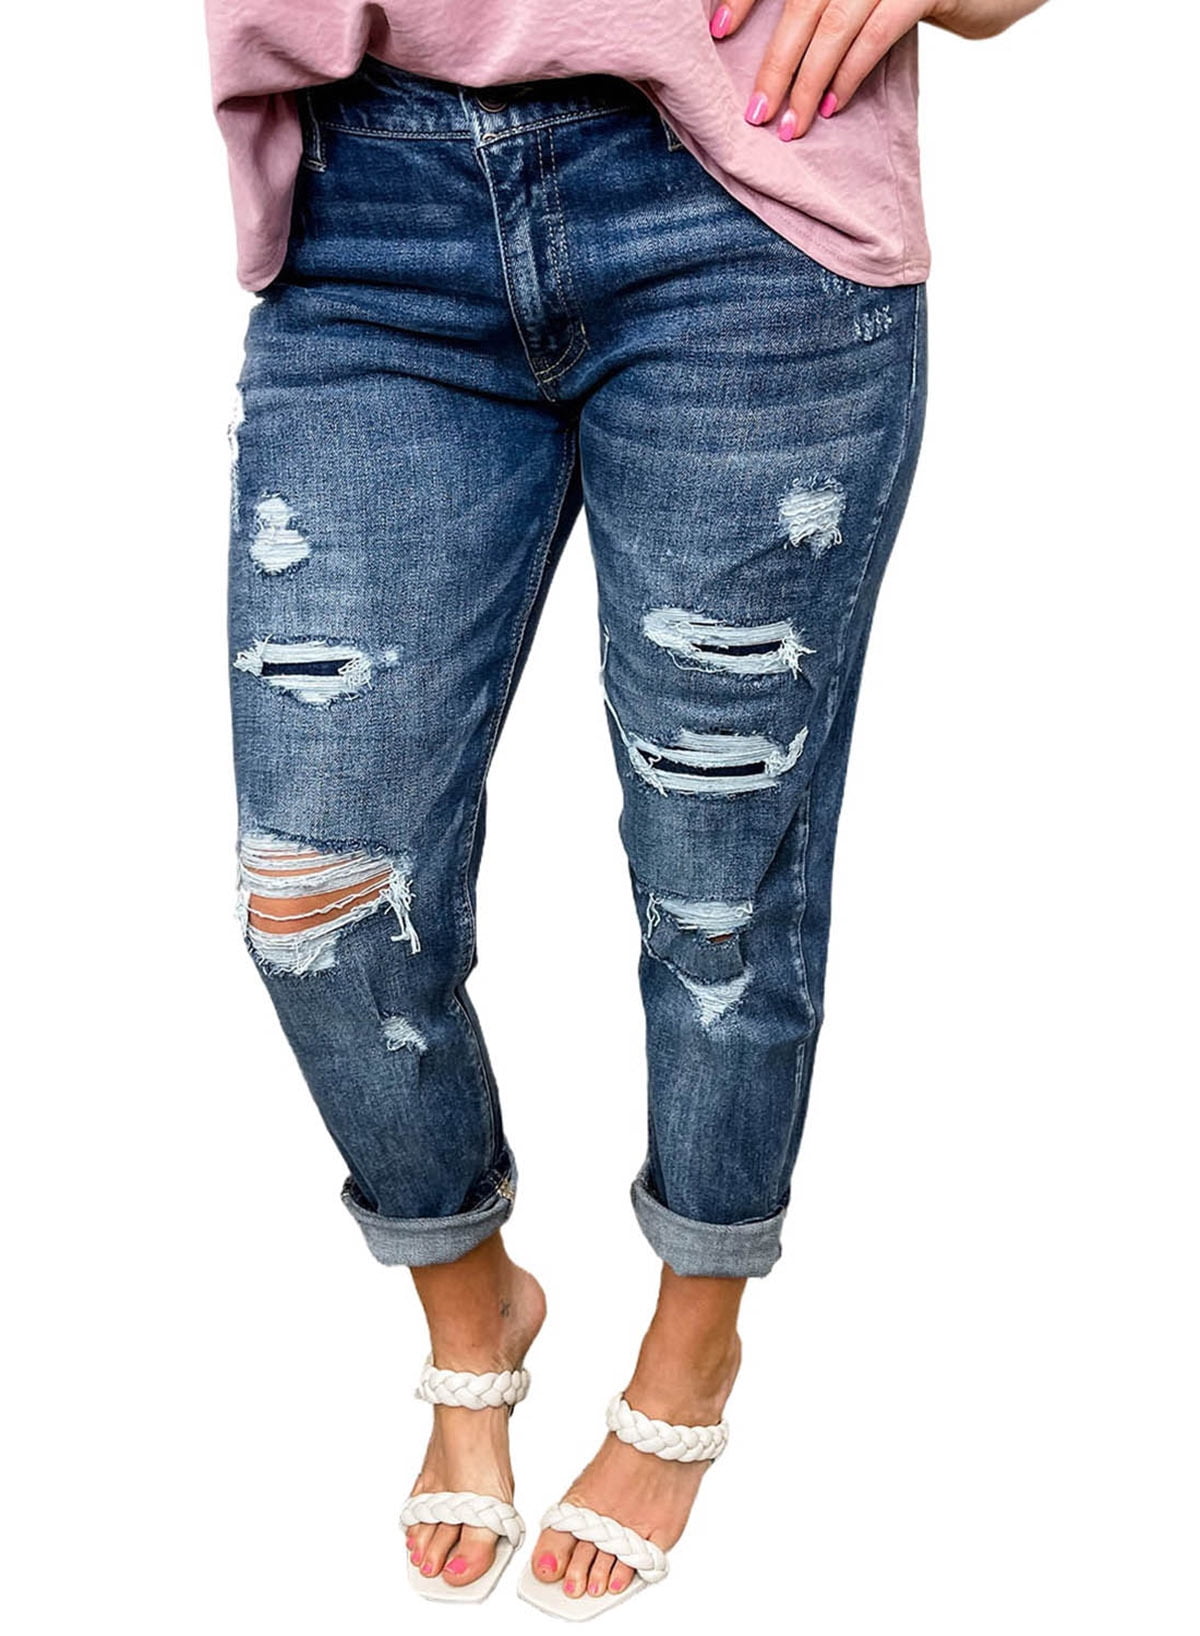 KUNMI Women High Waist Skinny Stretch Ripped Jeans Destroyed Denim Pants Plus Size 